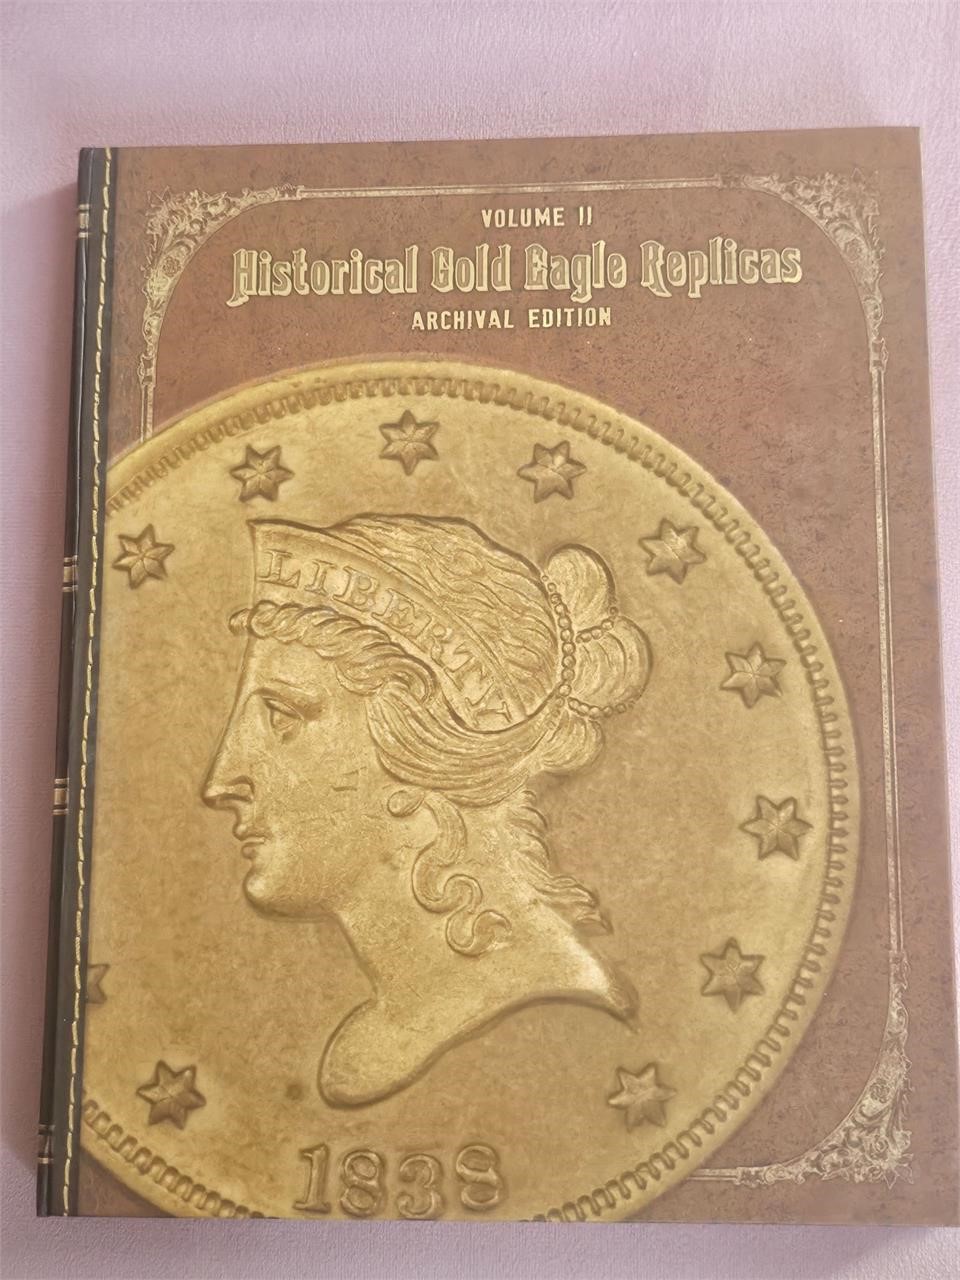 Historical Gold Eagle Replicas Collectors Book 2